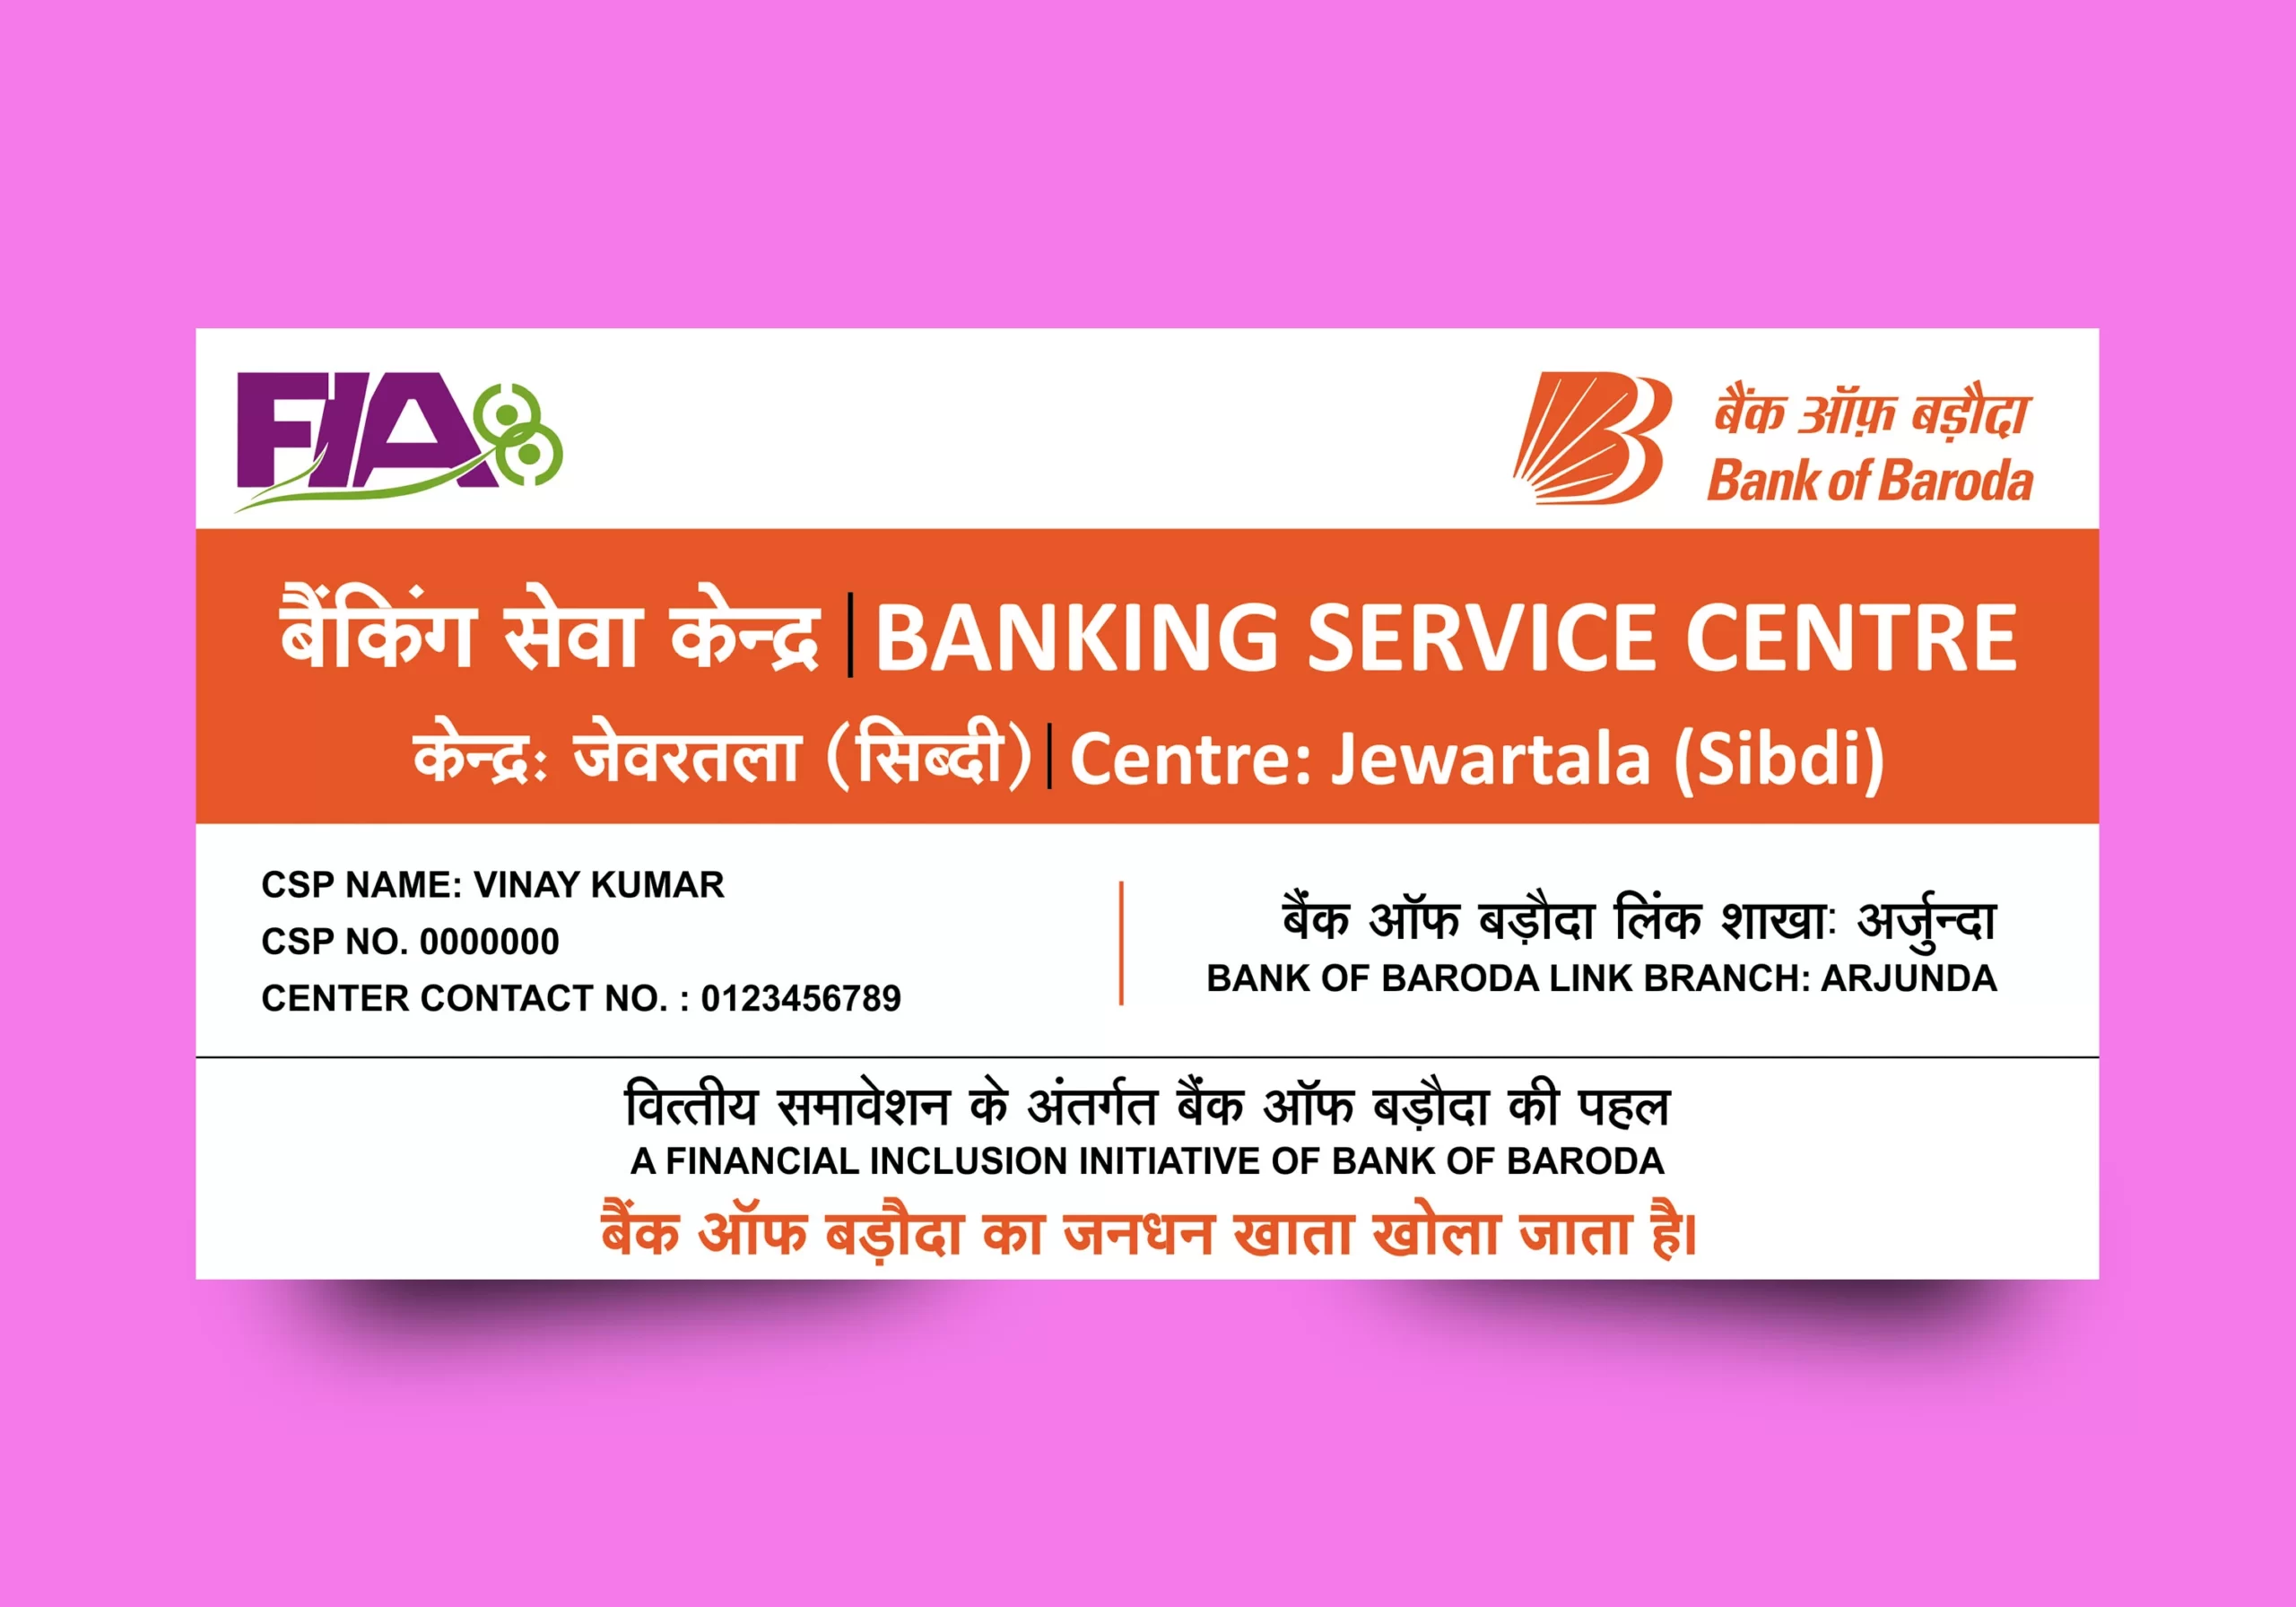 Bank of baroda flex banner kiosc branch 281121